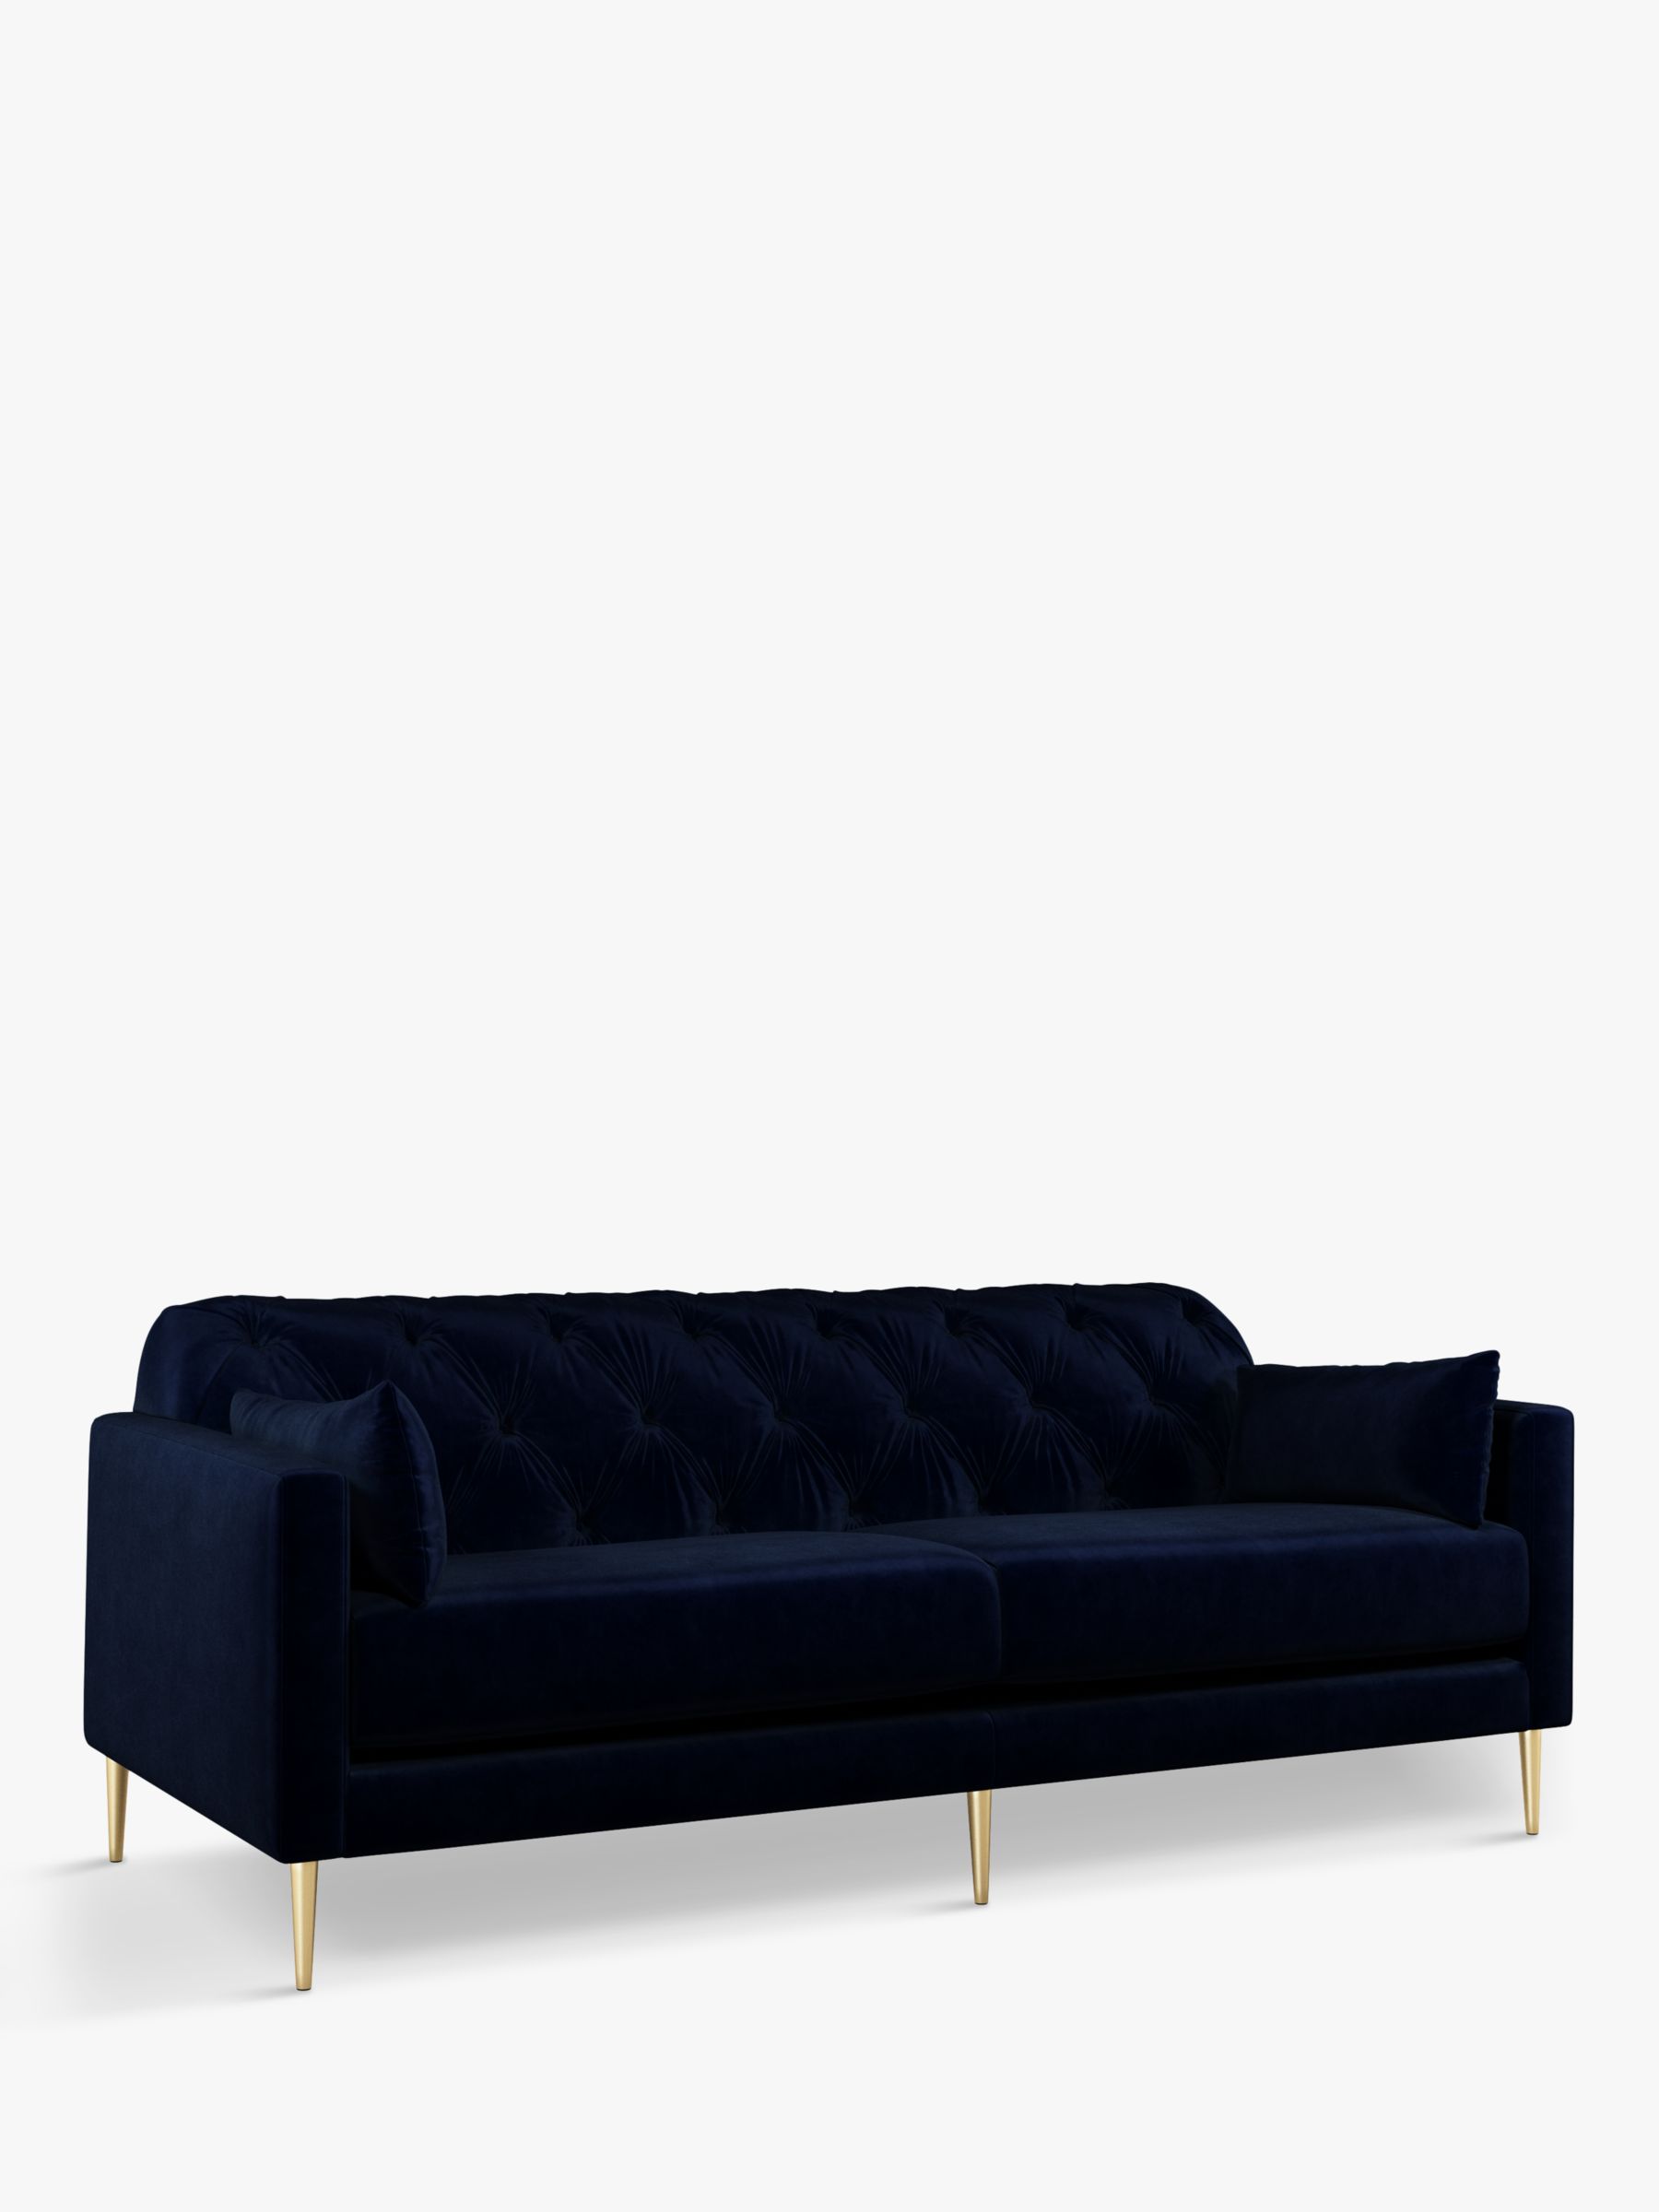 Mendel Range, Swoon Mendel Large 3 Seater Sofa, Gold Leg, Caspian Blue